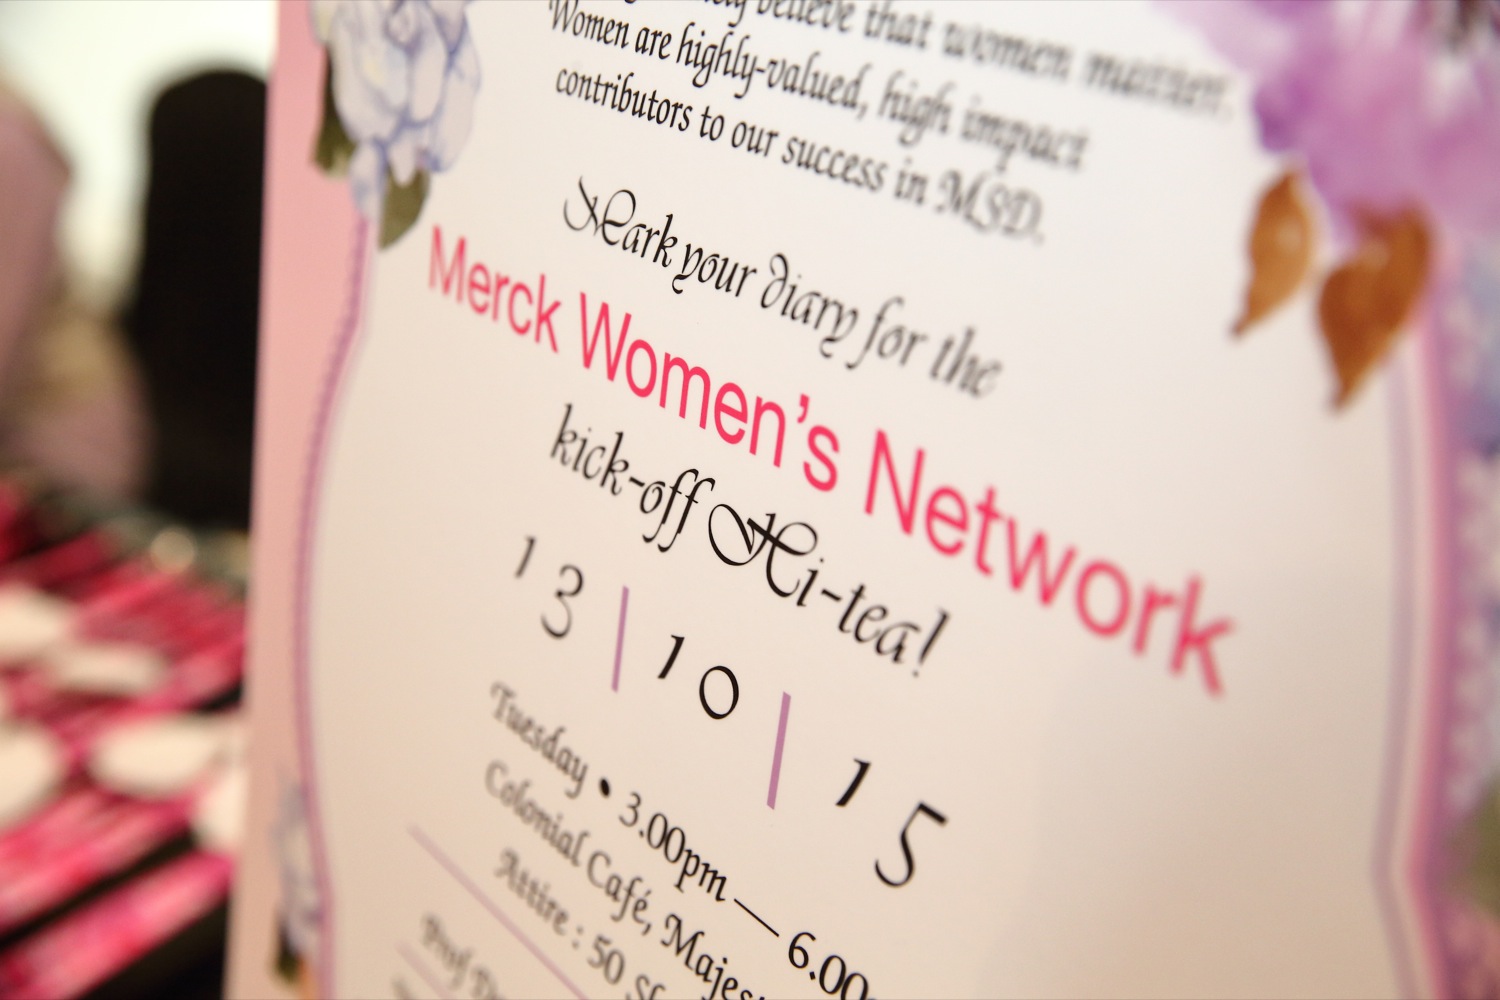 Merck Women Network event at Majestic Hotel